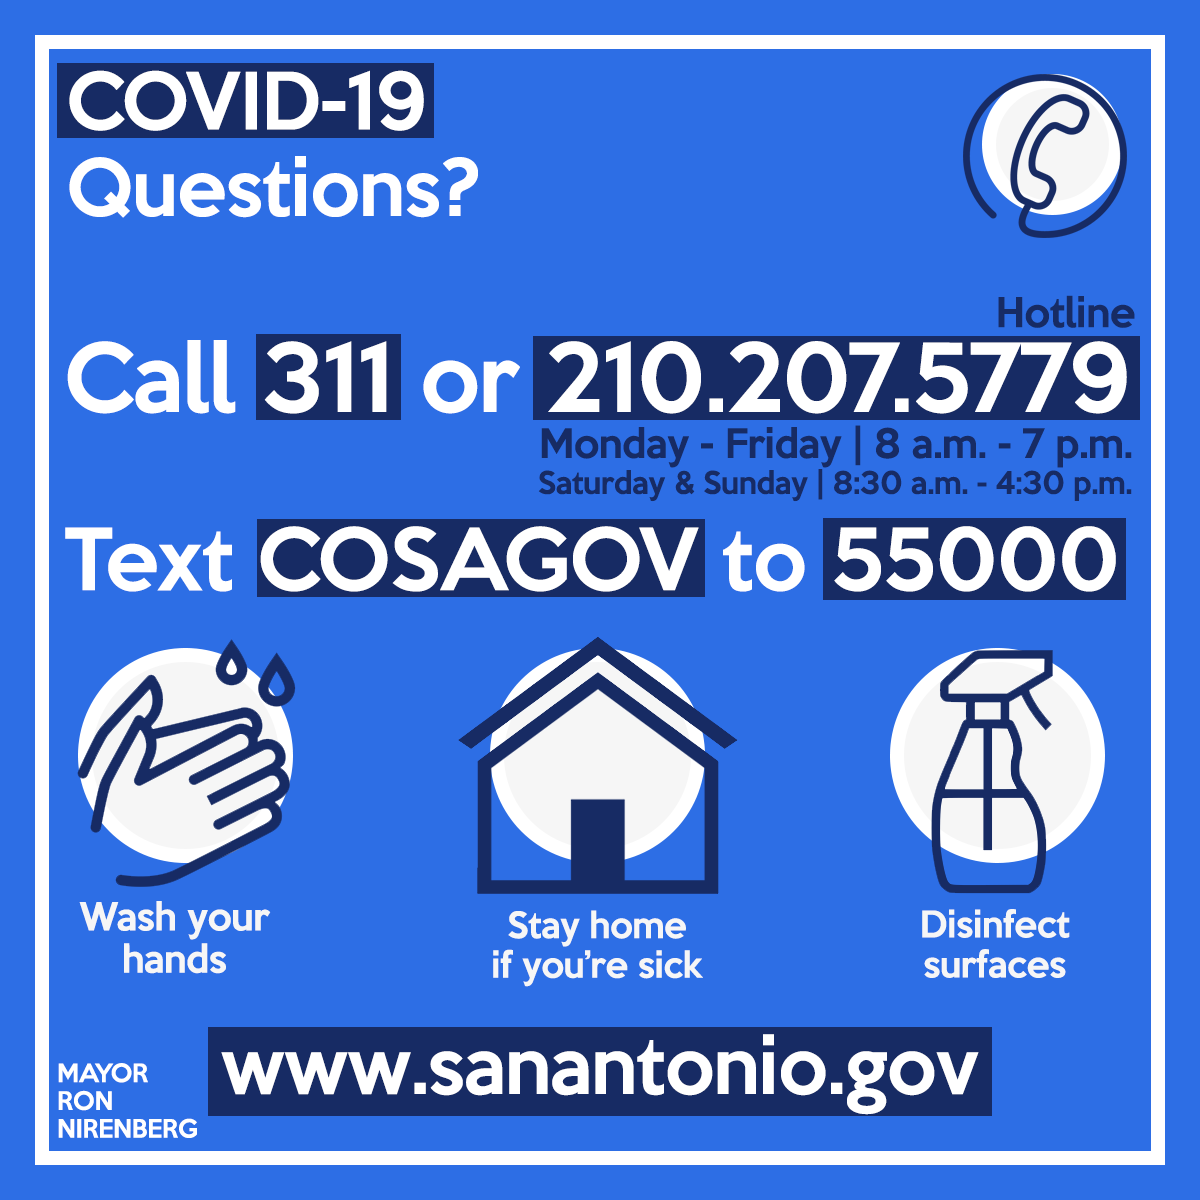 COMMUNICATION PORTALS:San Antonio COVID-19 website: https://sanantonio.gov/Health/News/Alerts/CoronaVirusAmerican Sign Language: http://sat.ahasalerts.com/ActiveAlerts.aspx?id=1334COVID-19 Hotline: 210.207.5779Text COSAGOV to 55000 for text alertsReady South Texas app: https://readysouthtexasapp.com 12/13